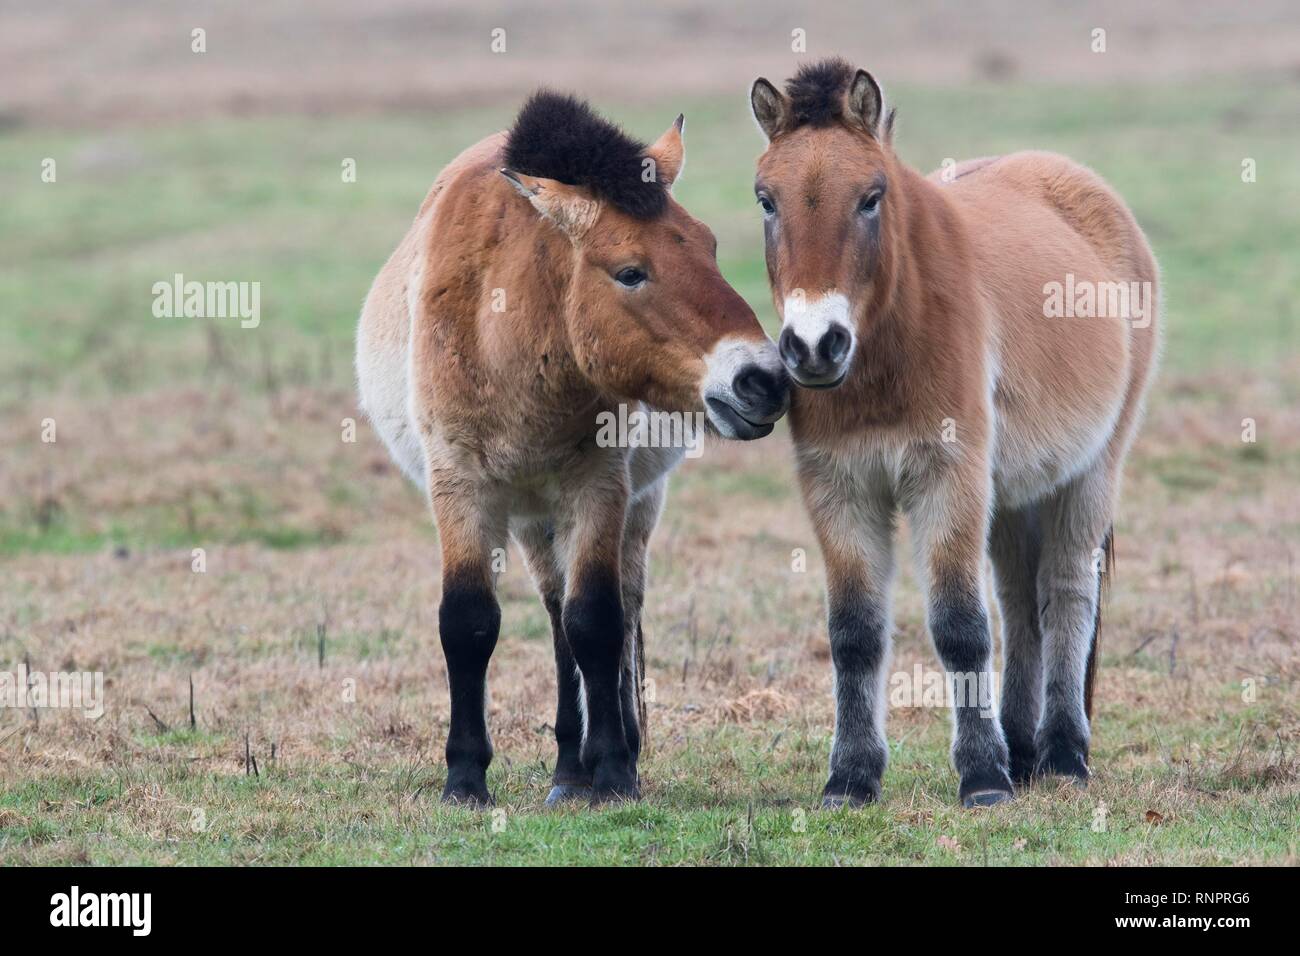 Los caballos de Przewalski (Equus ferus przewalskii) obtenga un tufillo de uno al otro, Emsland, Baja Sajonia, Alemania Foto de stock